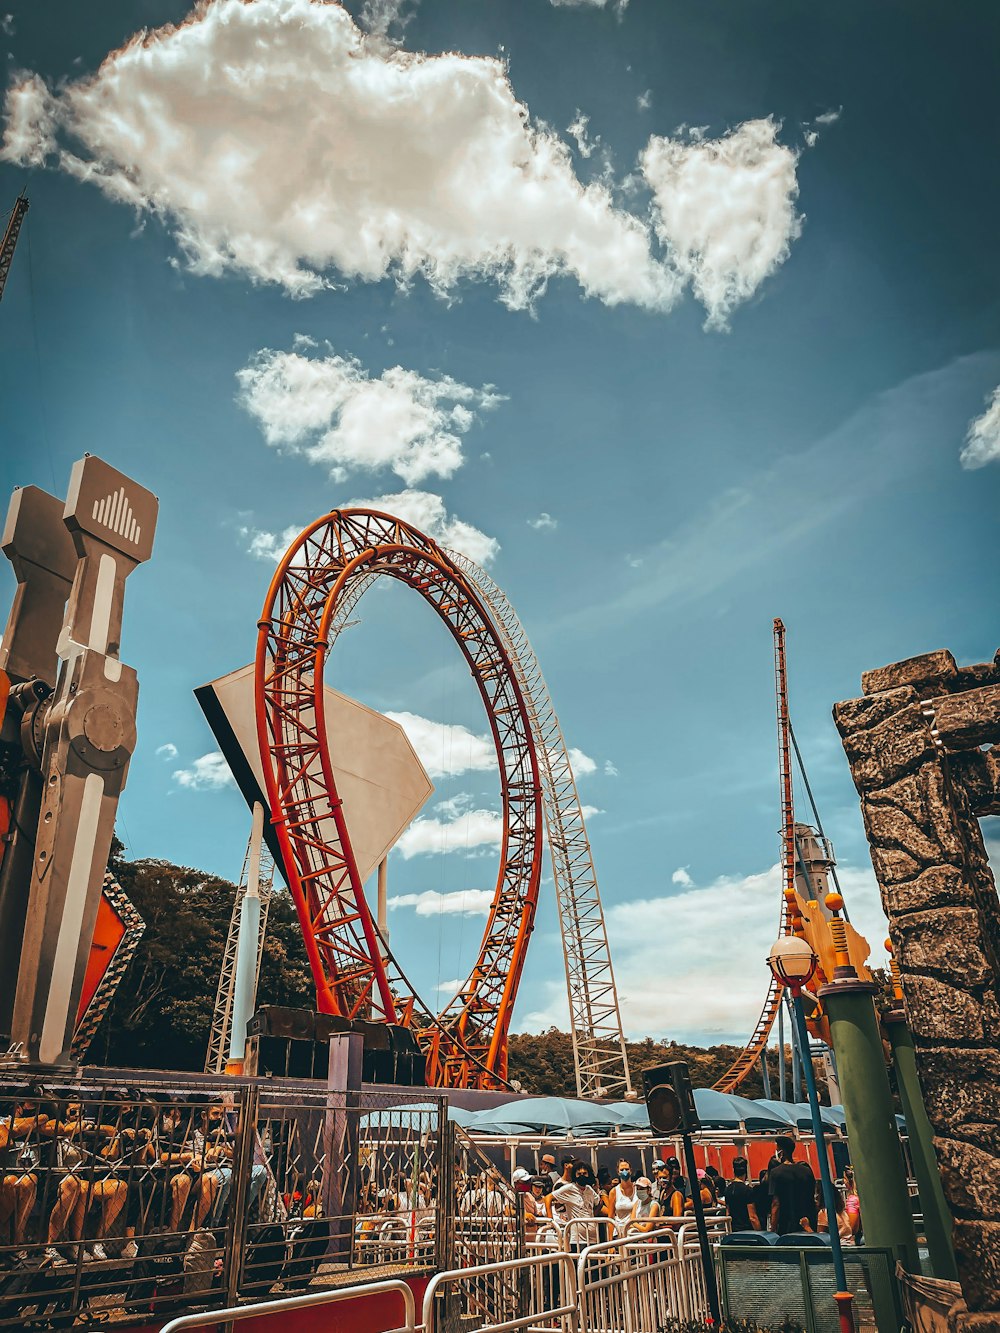 a roller coaster at a theme park under a cloudy blue sky